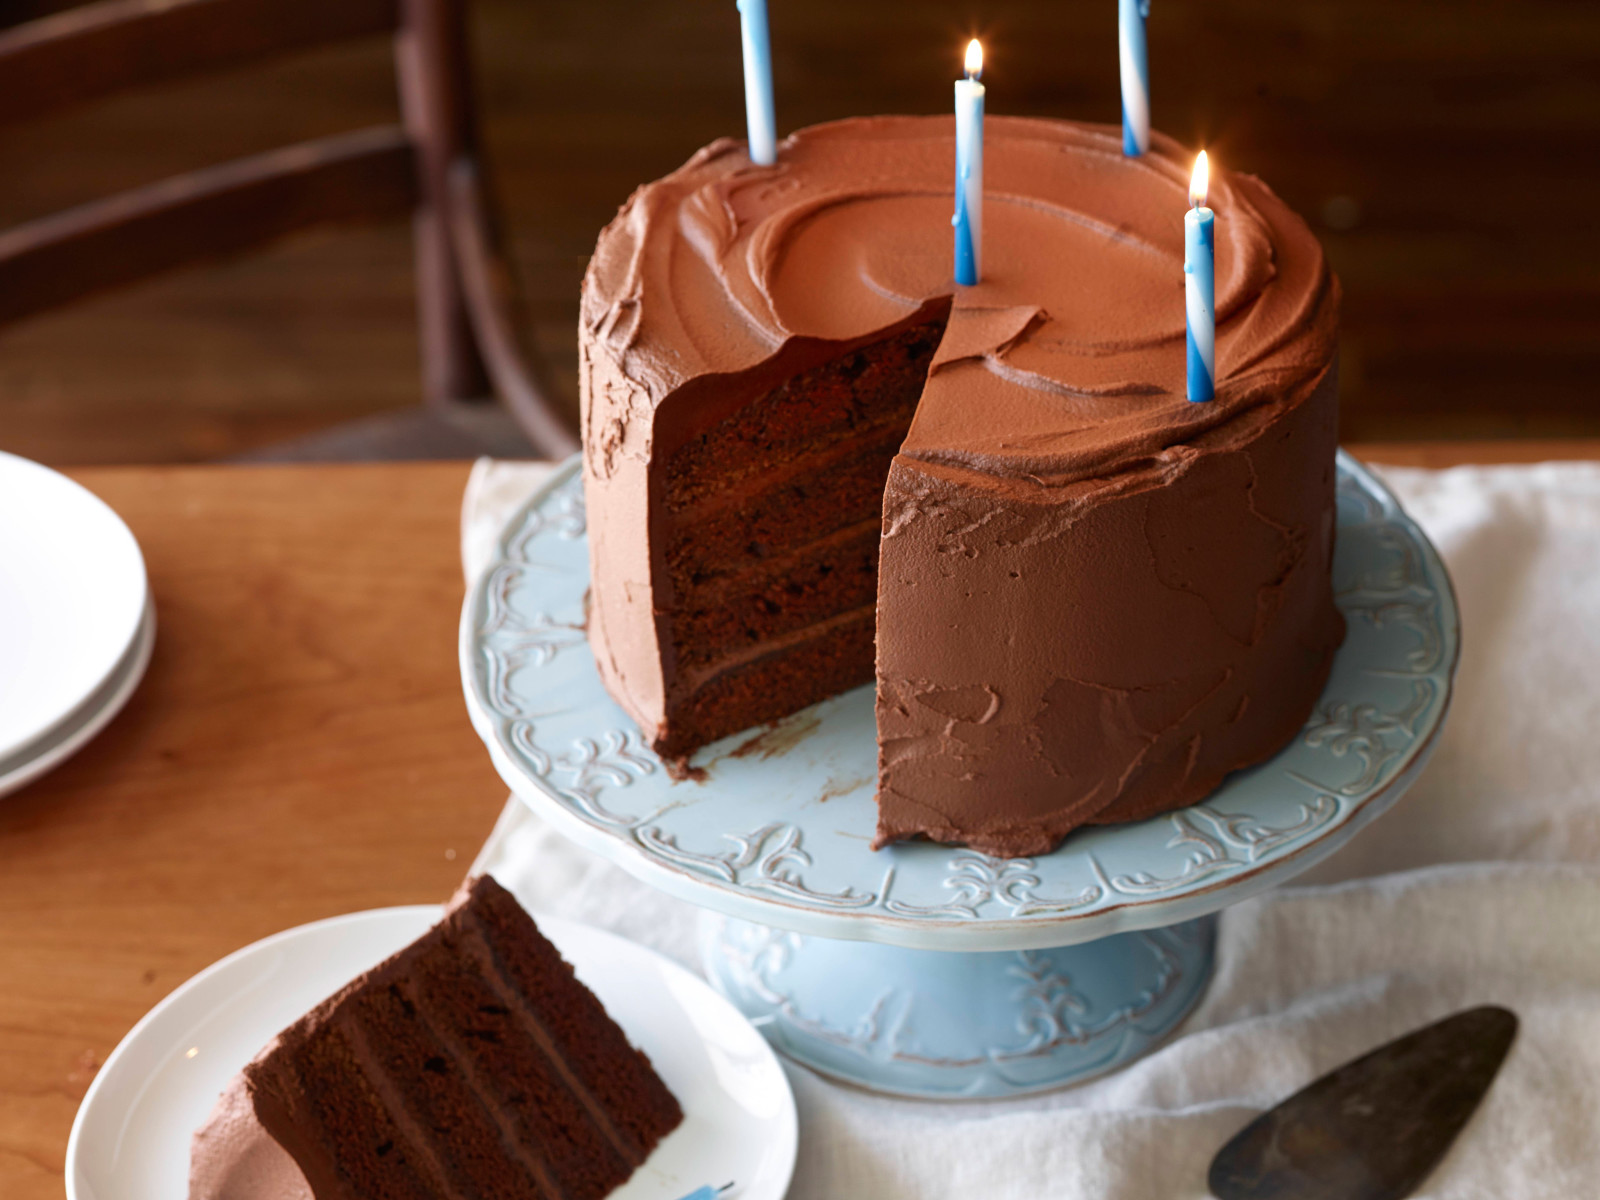 Baking Classes for Memorable Birthday Cakes